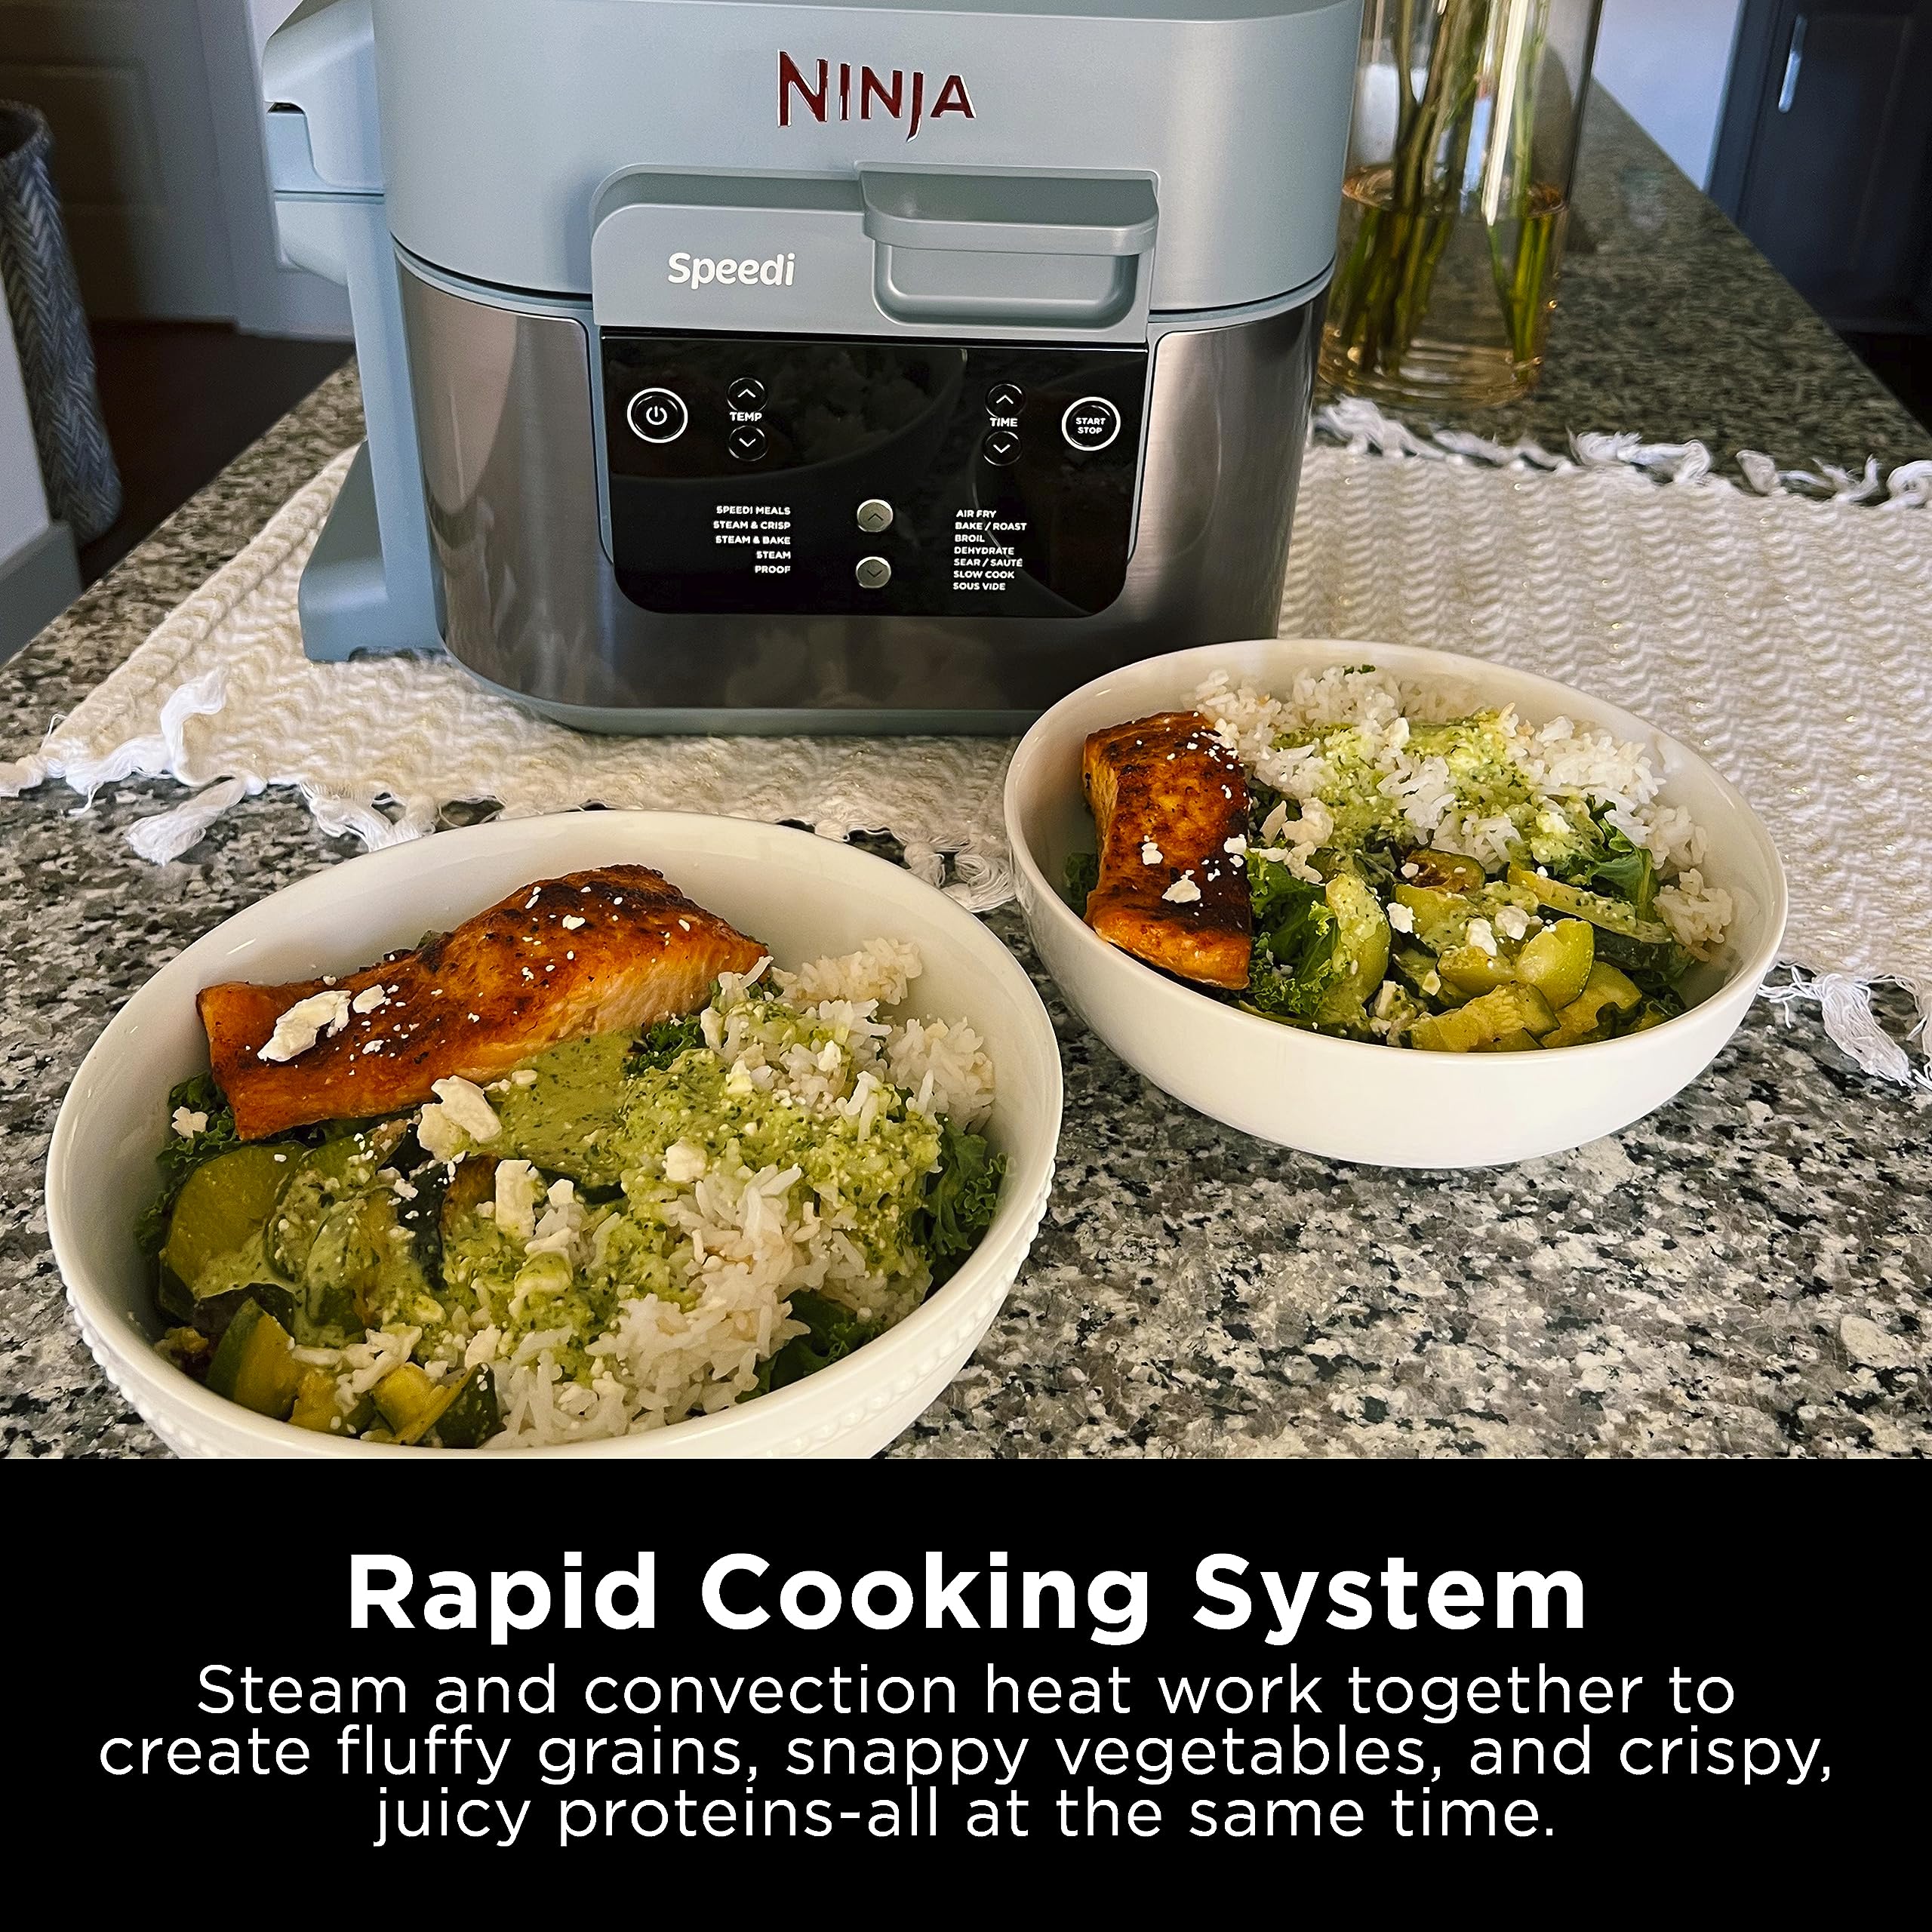 Ninja SF301 Speedi Rapid Cooker & Air Fryer, 6-Quart Capacity, 12-in-1 Functions to Steam, Bake, Roast, Sear, Sauté, Slow Cook, Sous Vide & More, 15-Minute Speedi Meals All In One Pot, Sea Salt Gray